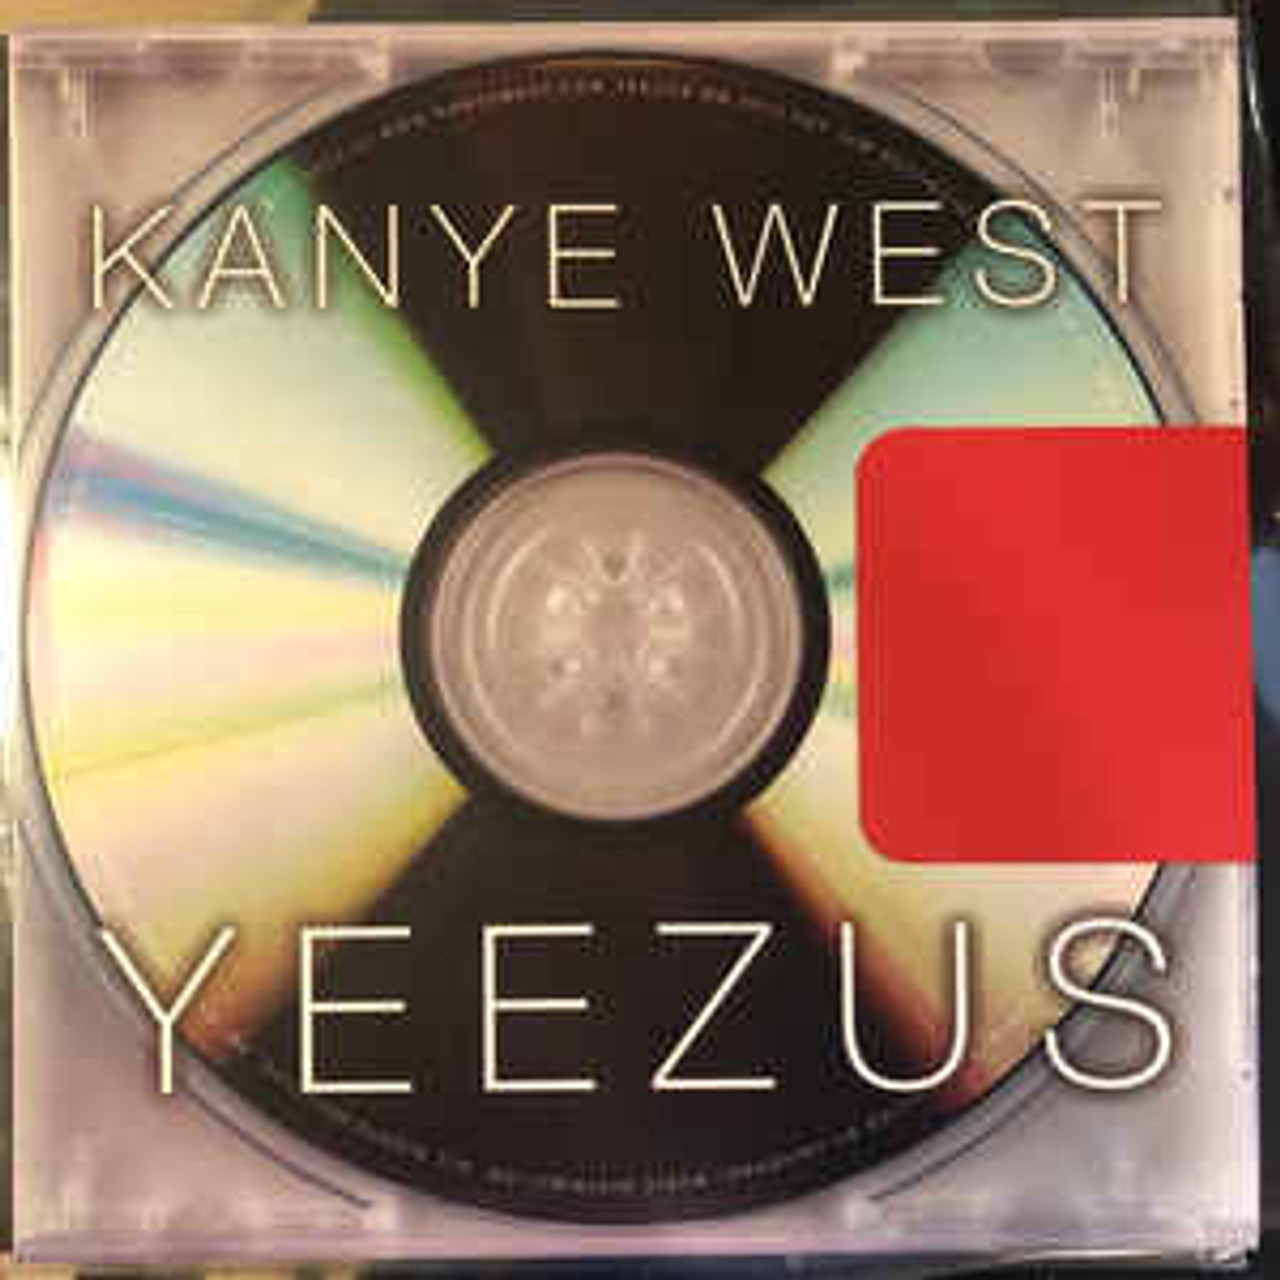 KANYE WEST Yeezus - New Import LP on Grey Marbled Vinyl